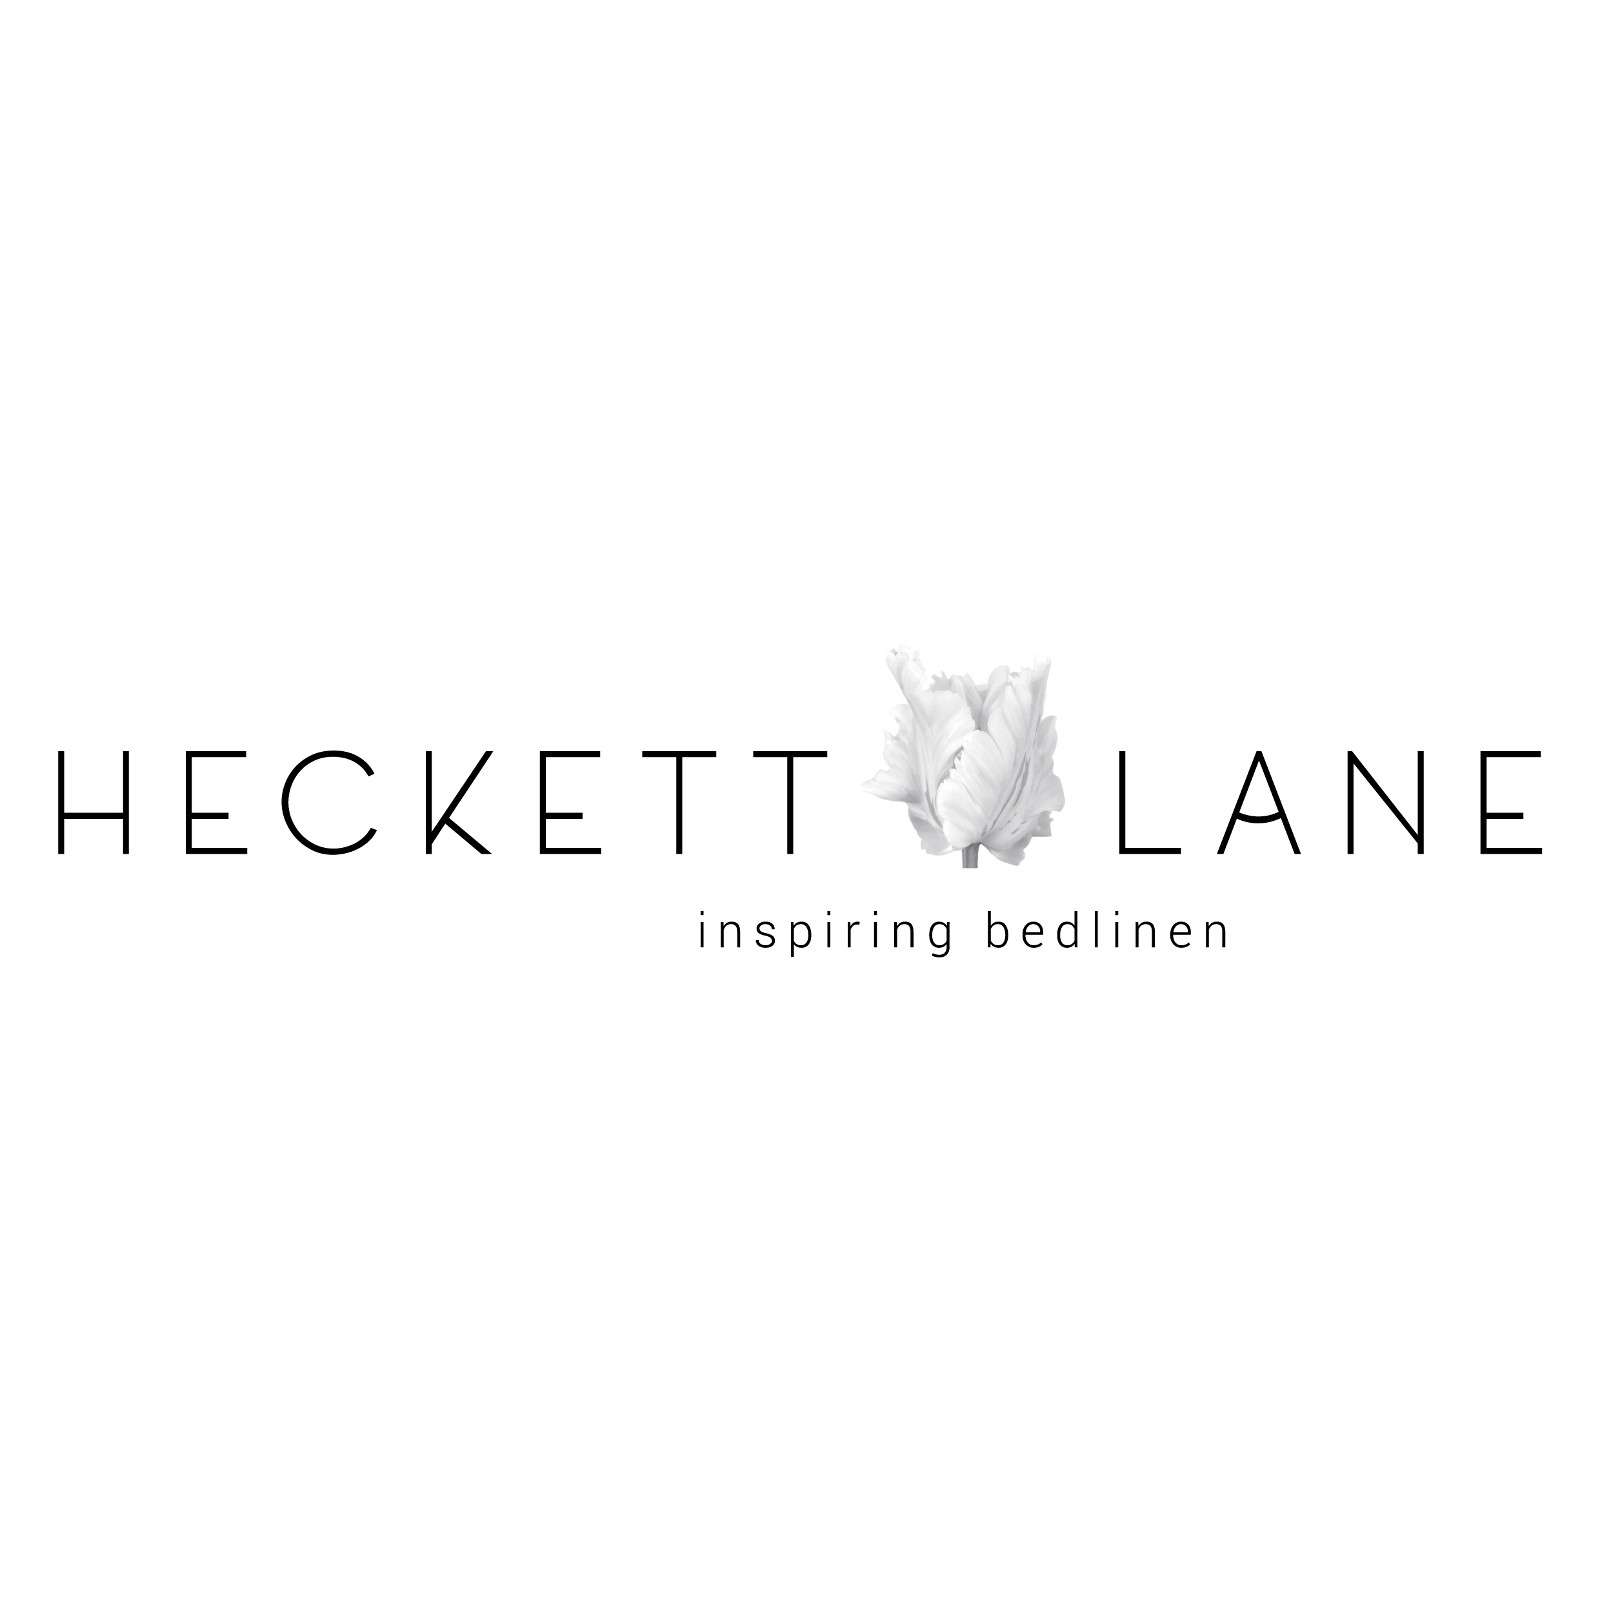 Heckett Lane